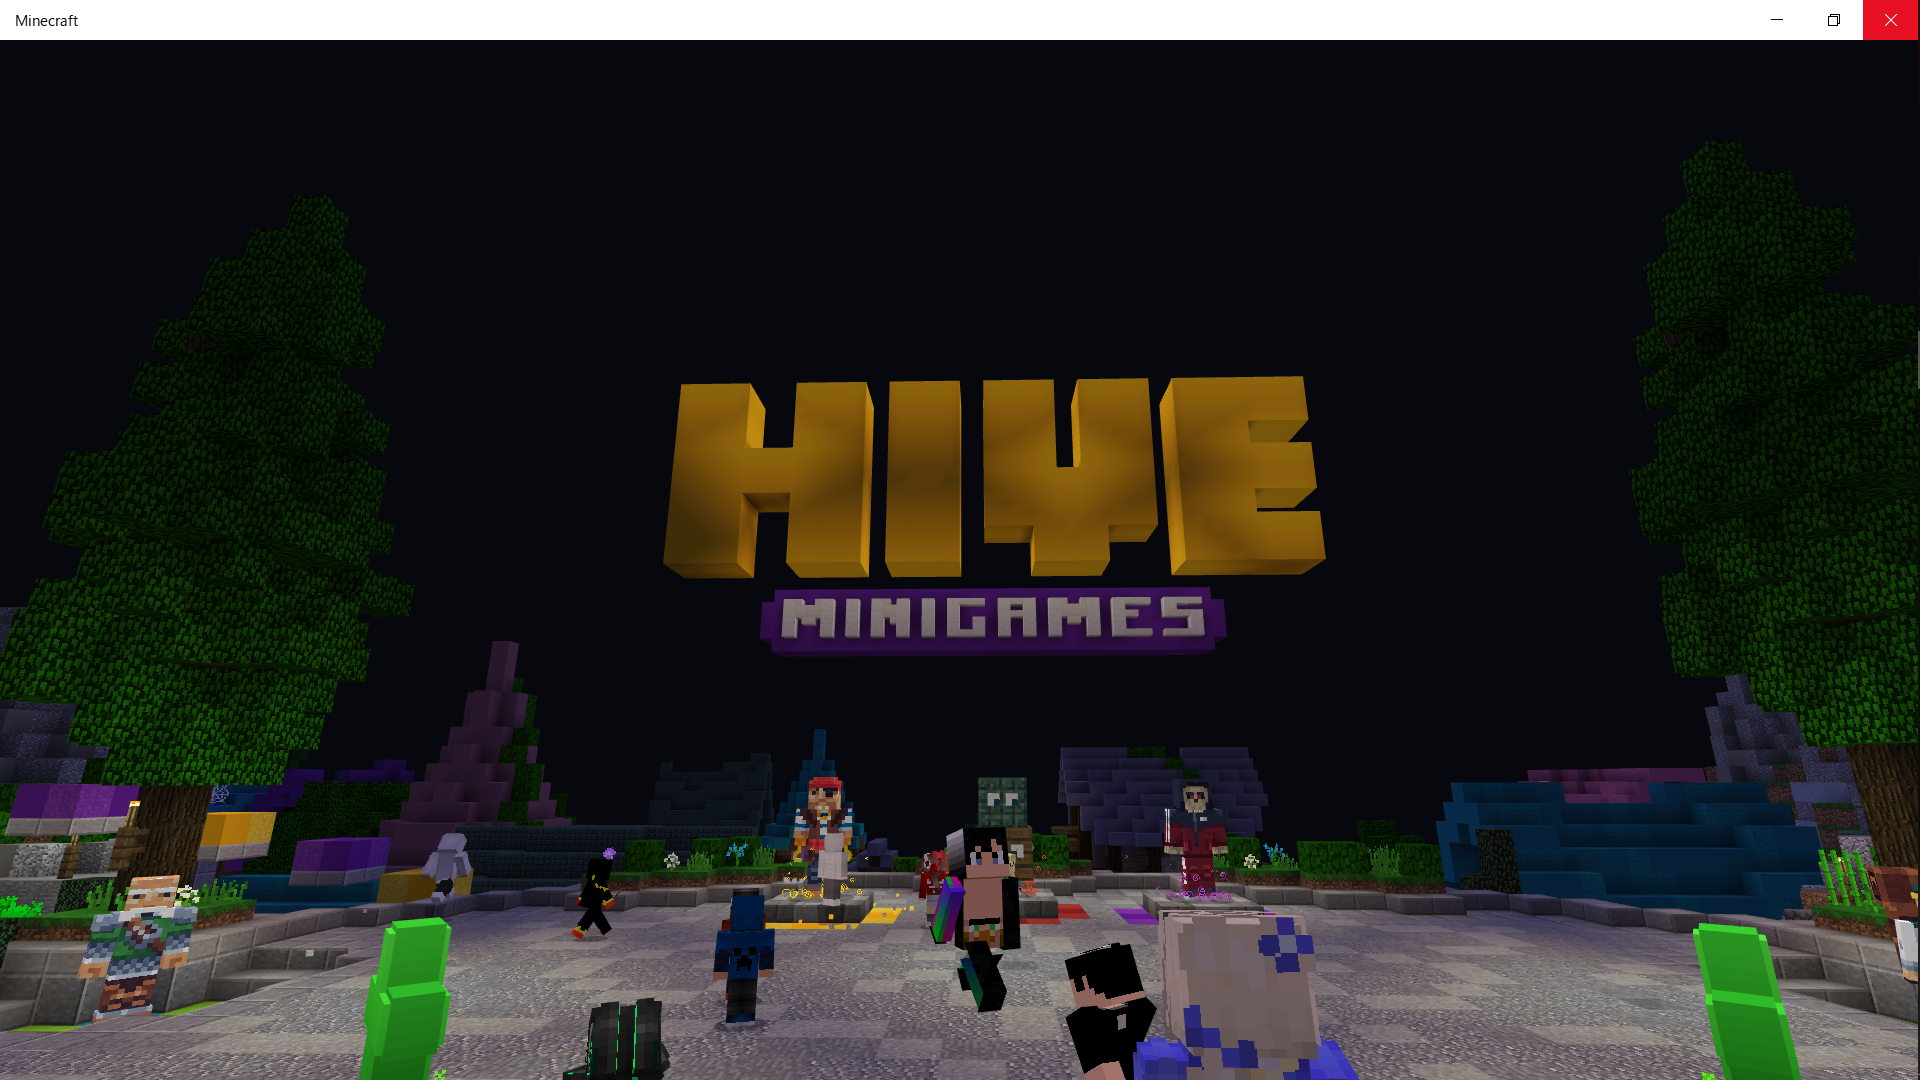 Minecraft The Hive 遊び方を解説 すたんつのゲームボックス